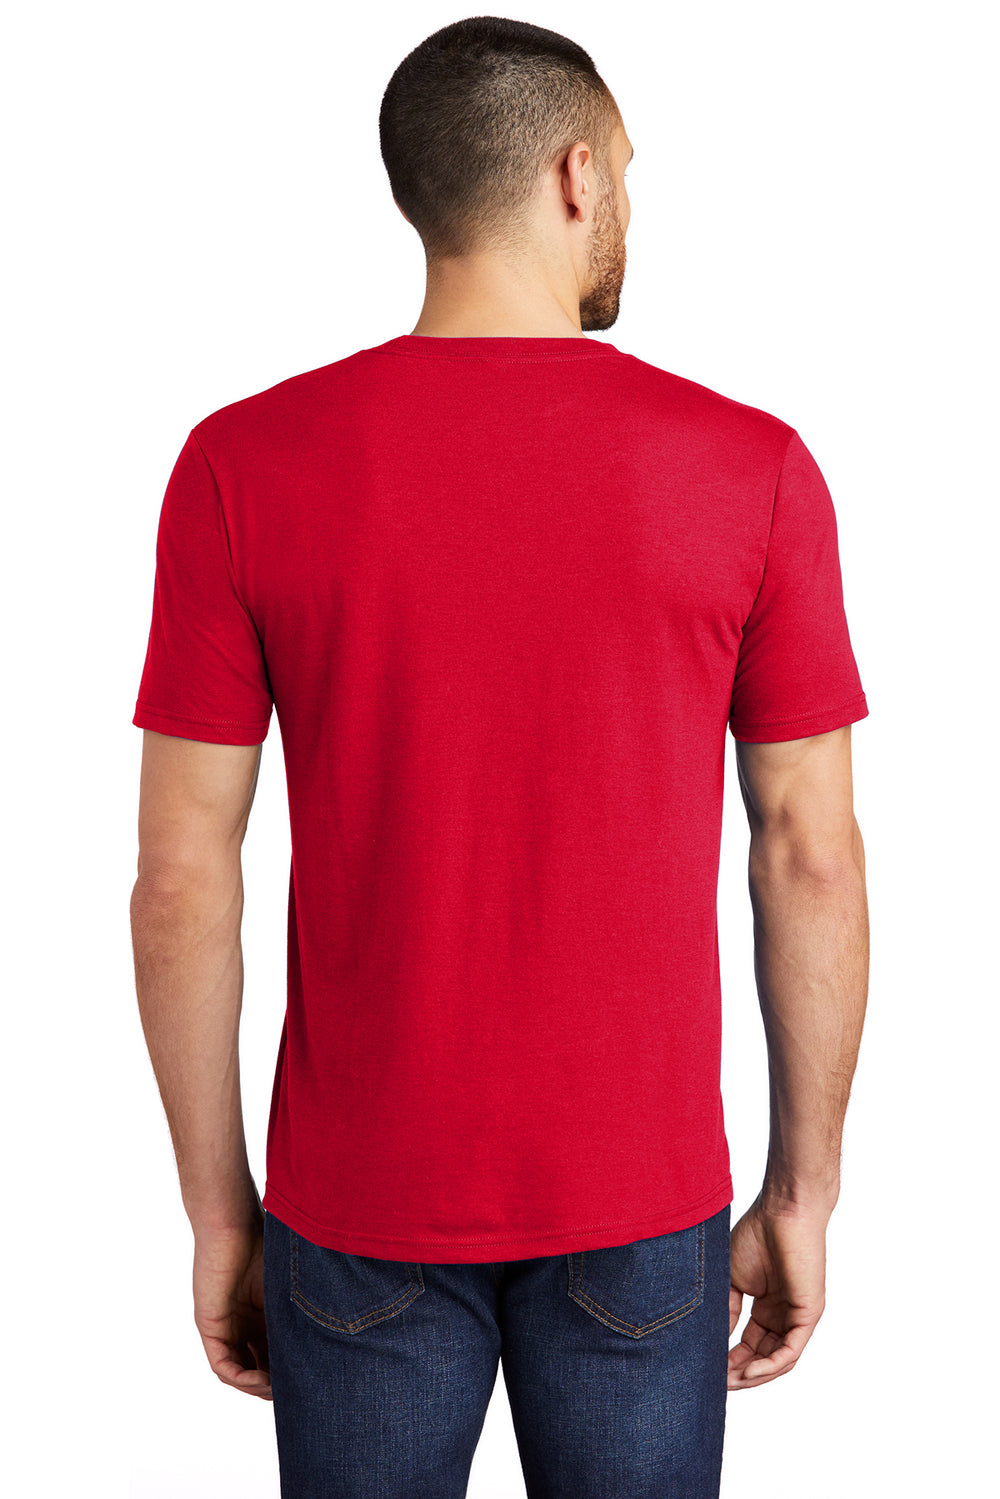 District DM130 Mens Perfect Tri Short Sleeve Crewneck T-Shirt Classic Red Back